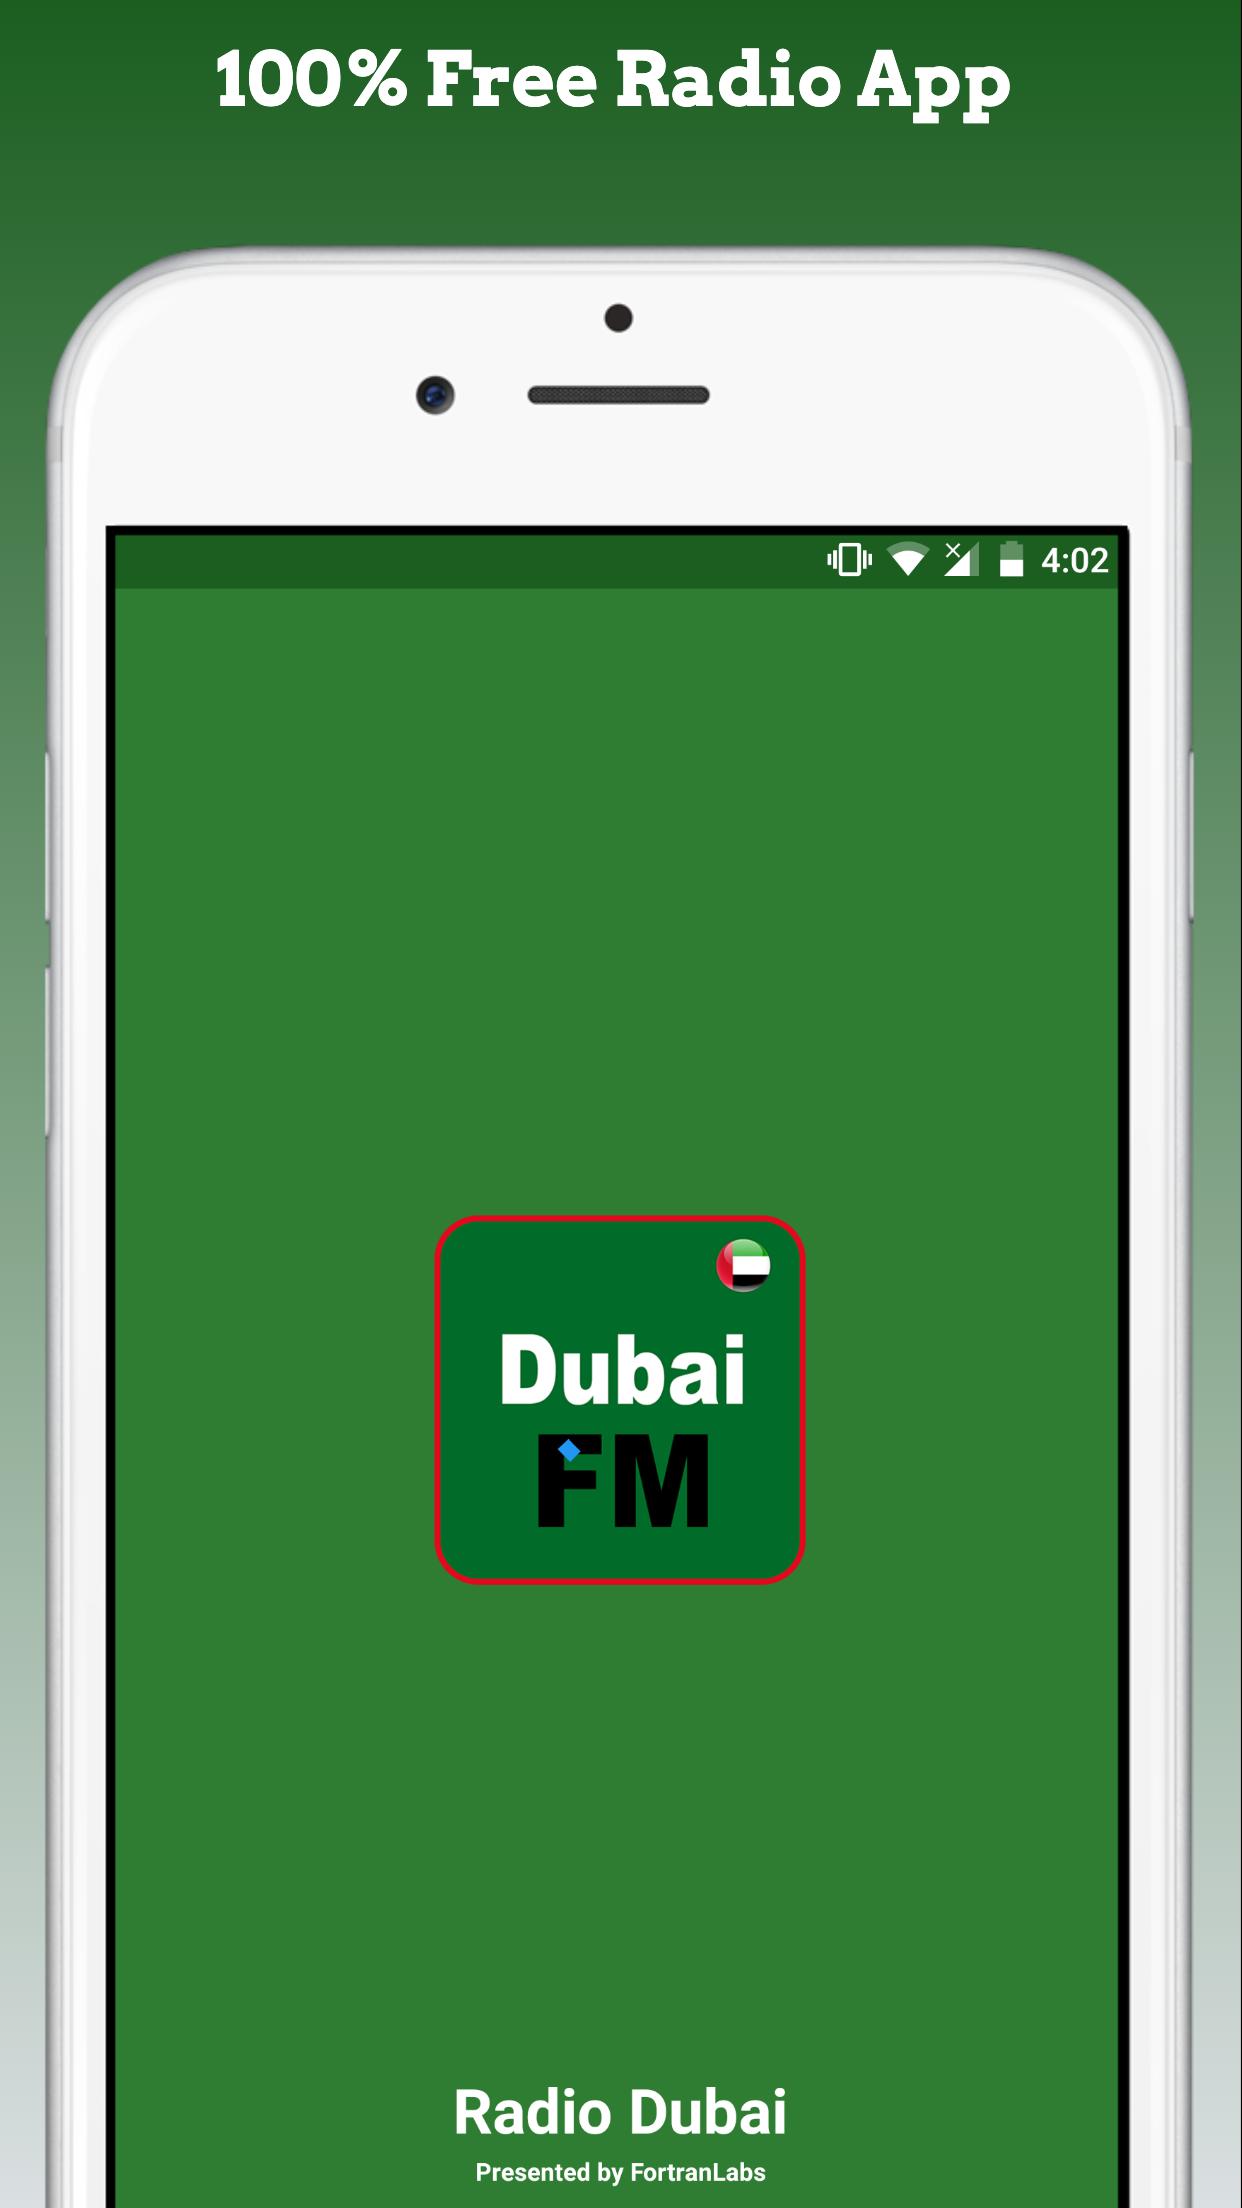 Dubai Radio Stations Online - Dubai FM AM Music for Android - APK Download